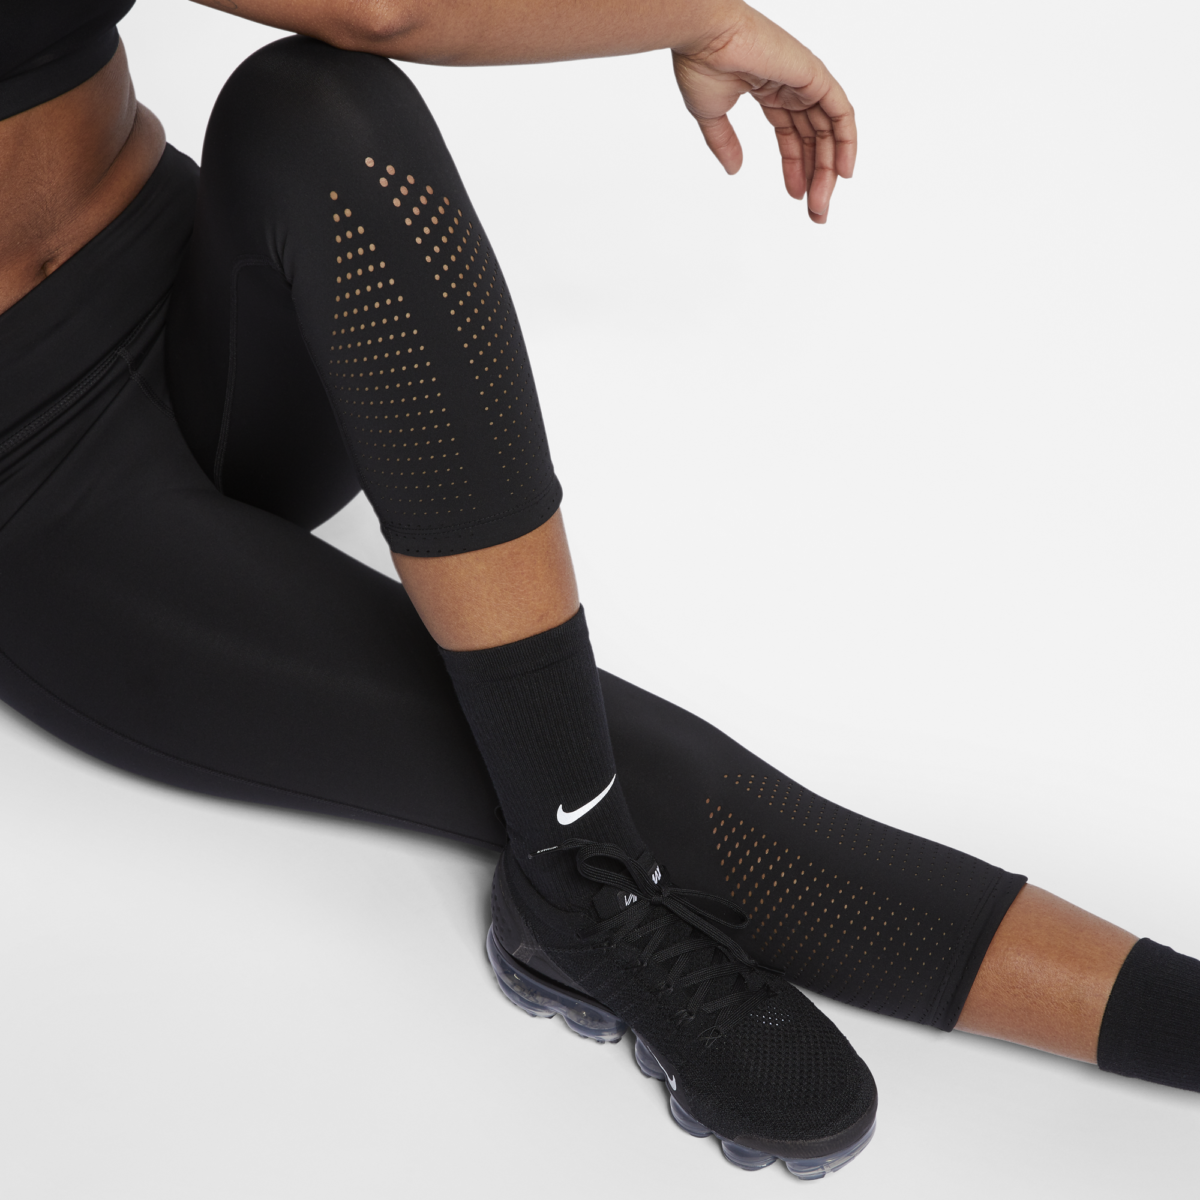 Nike Women's Epic Lux Cropped Black Running Leggings J2210 Size XS